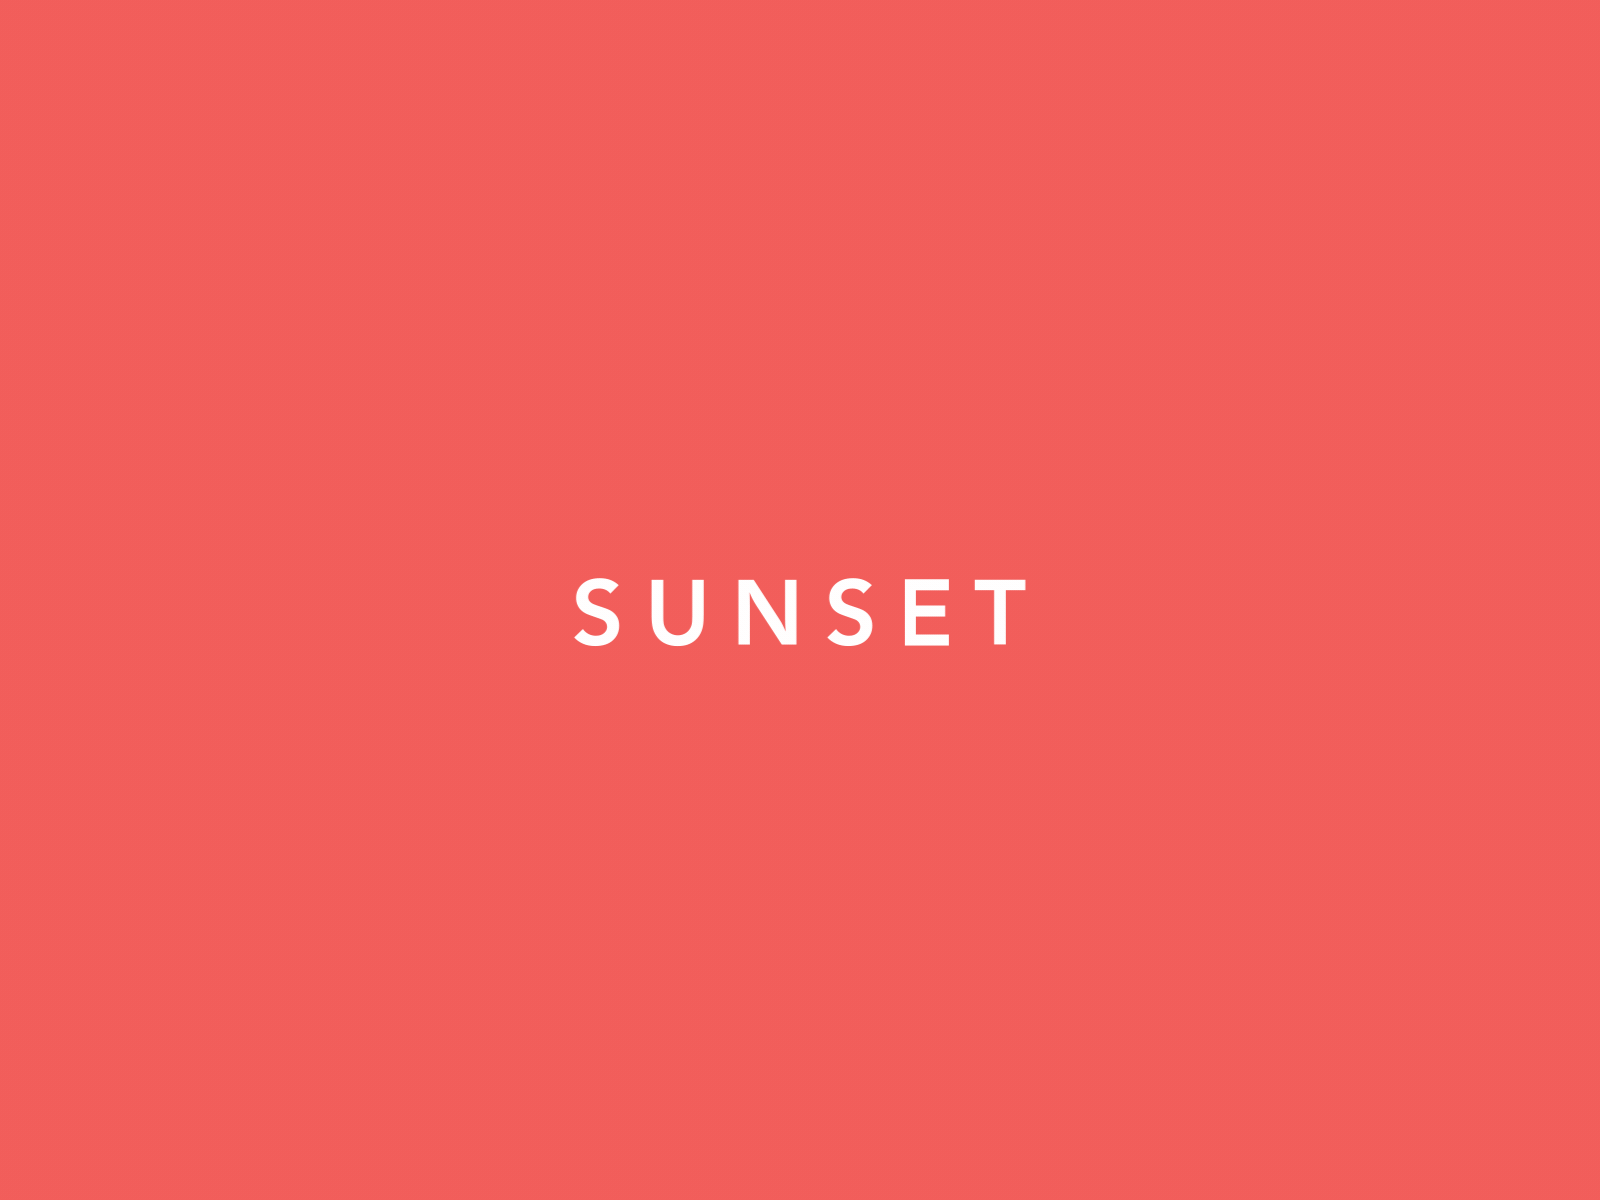 Sunset Mountain Logo Design by Baun Studios on Dribbble